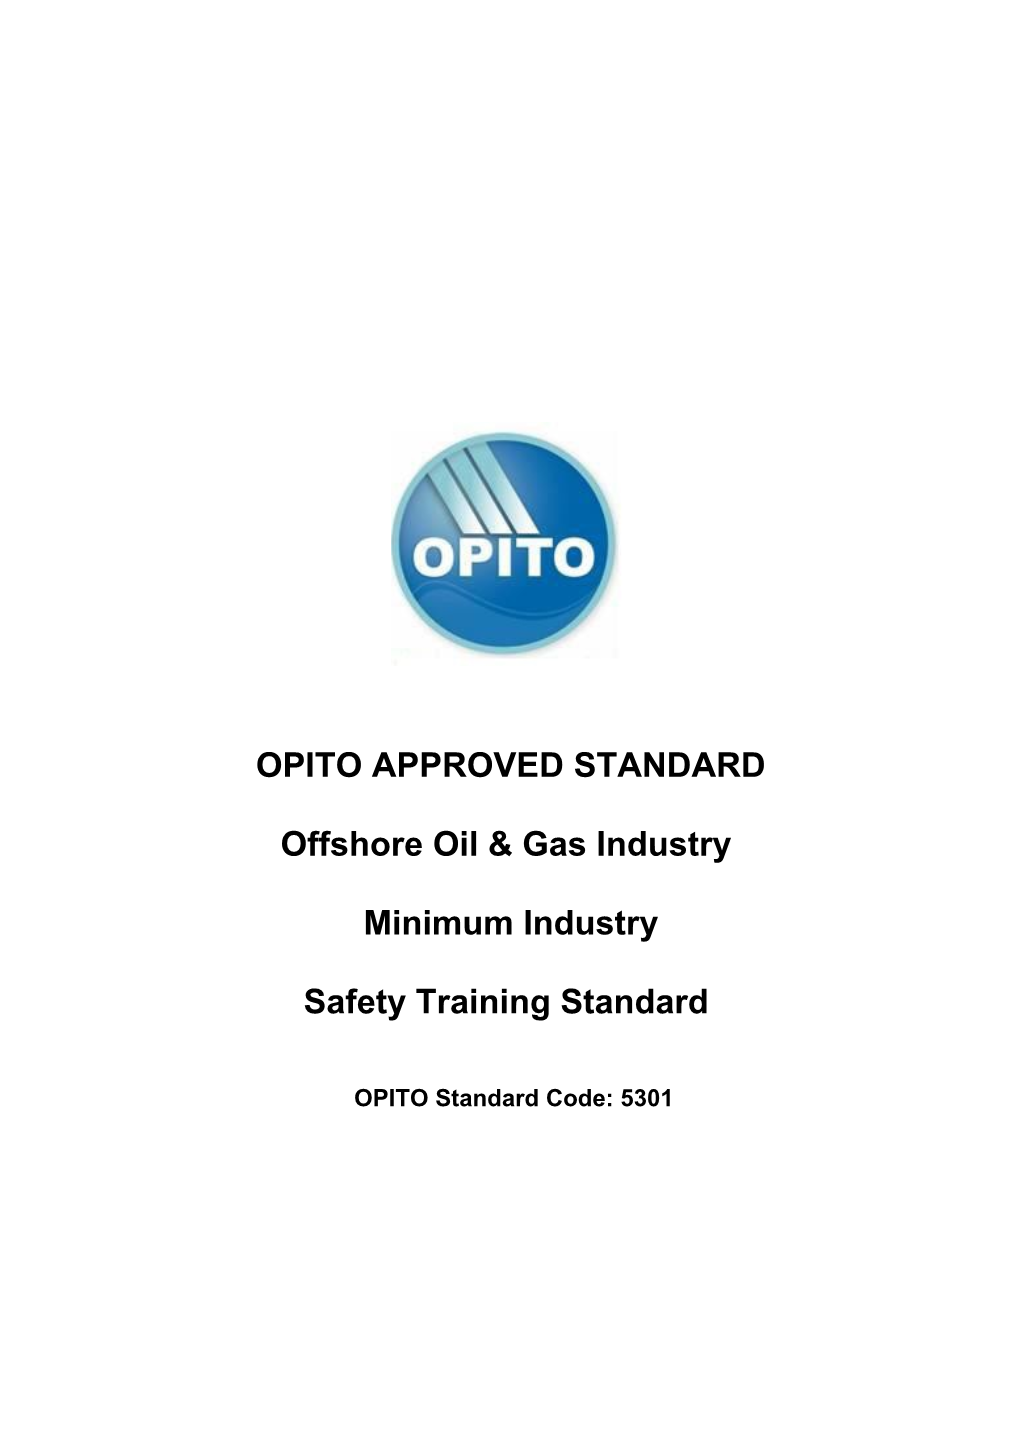 Minimum Industry Safety Training Standard